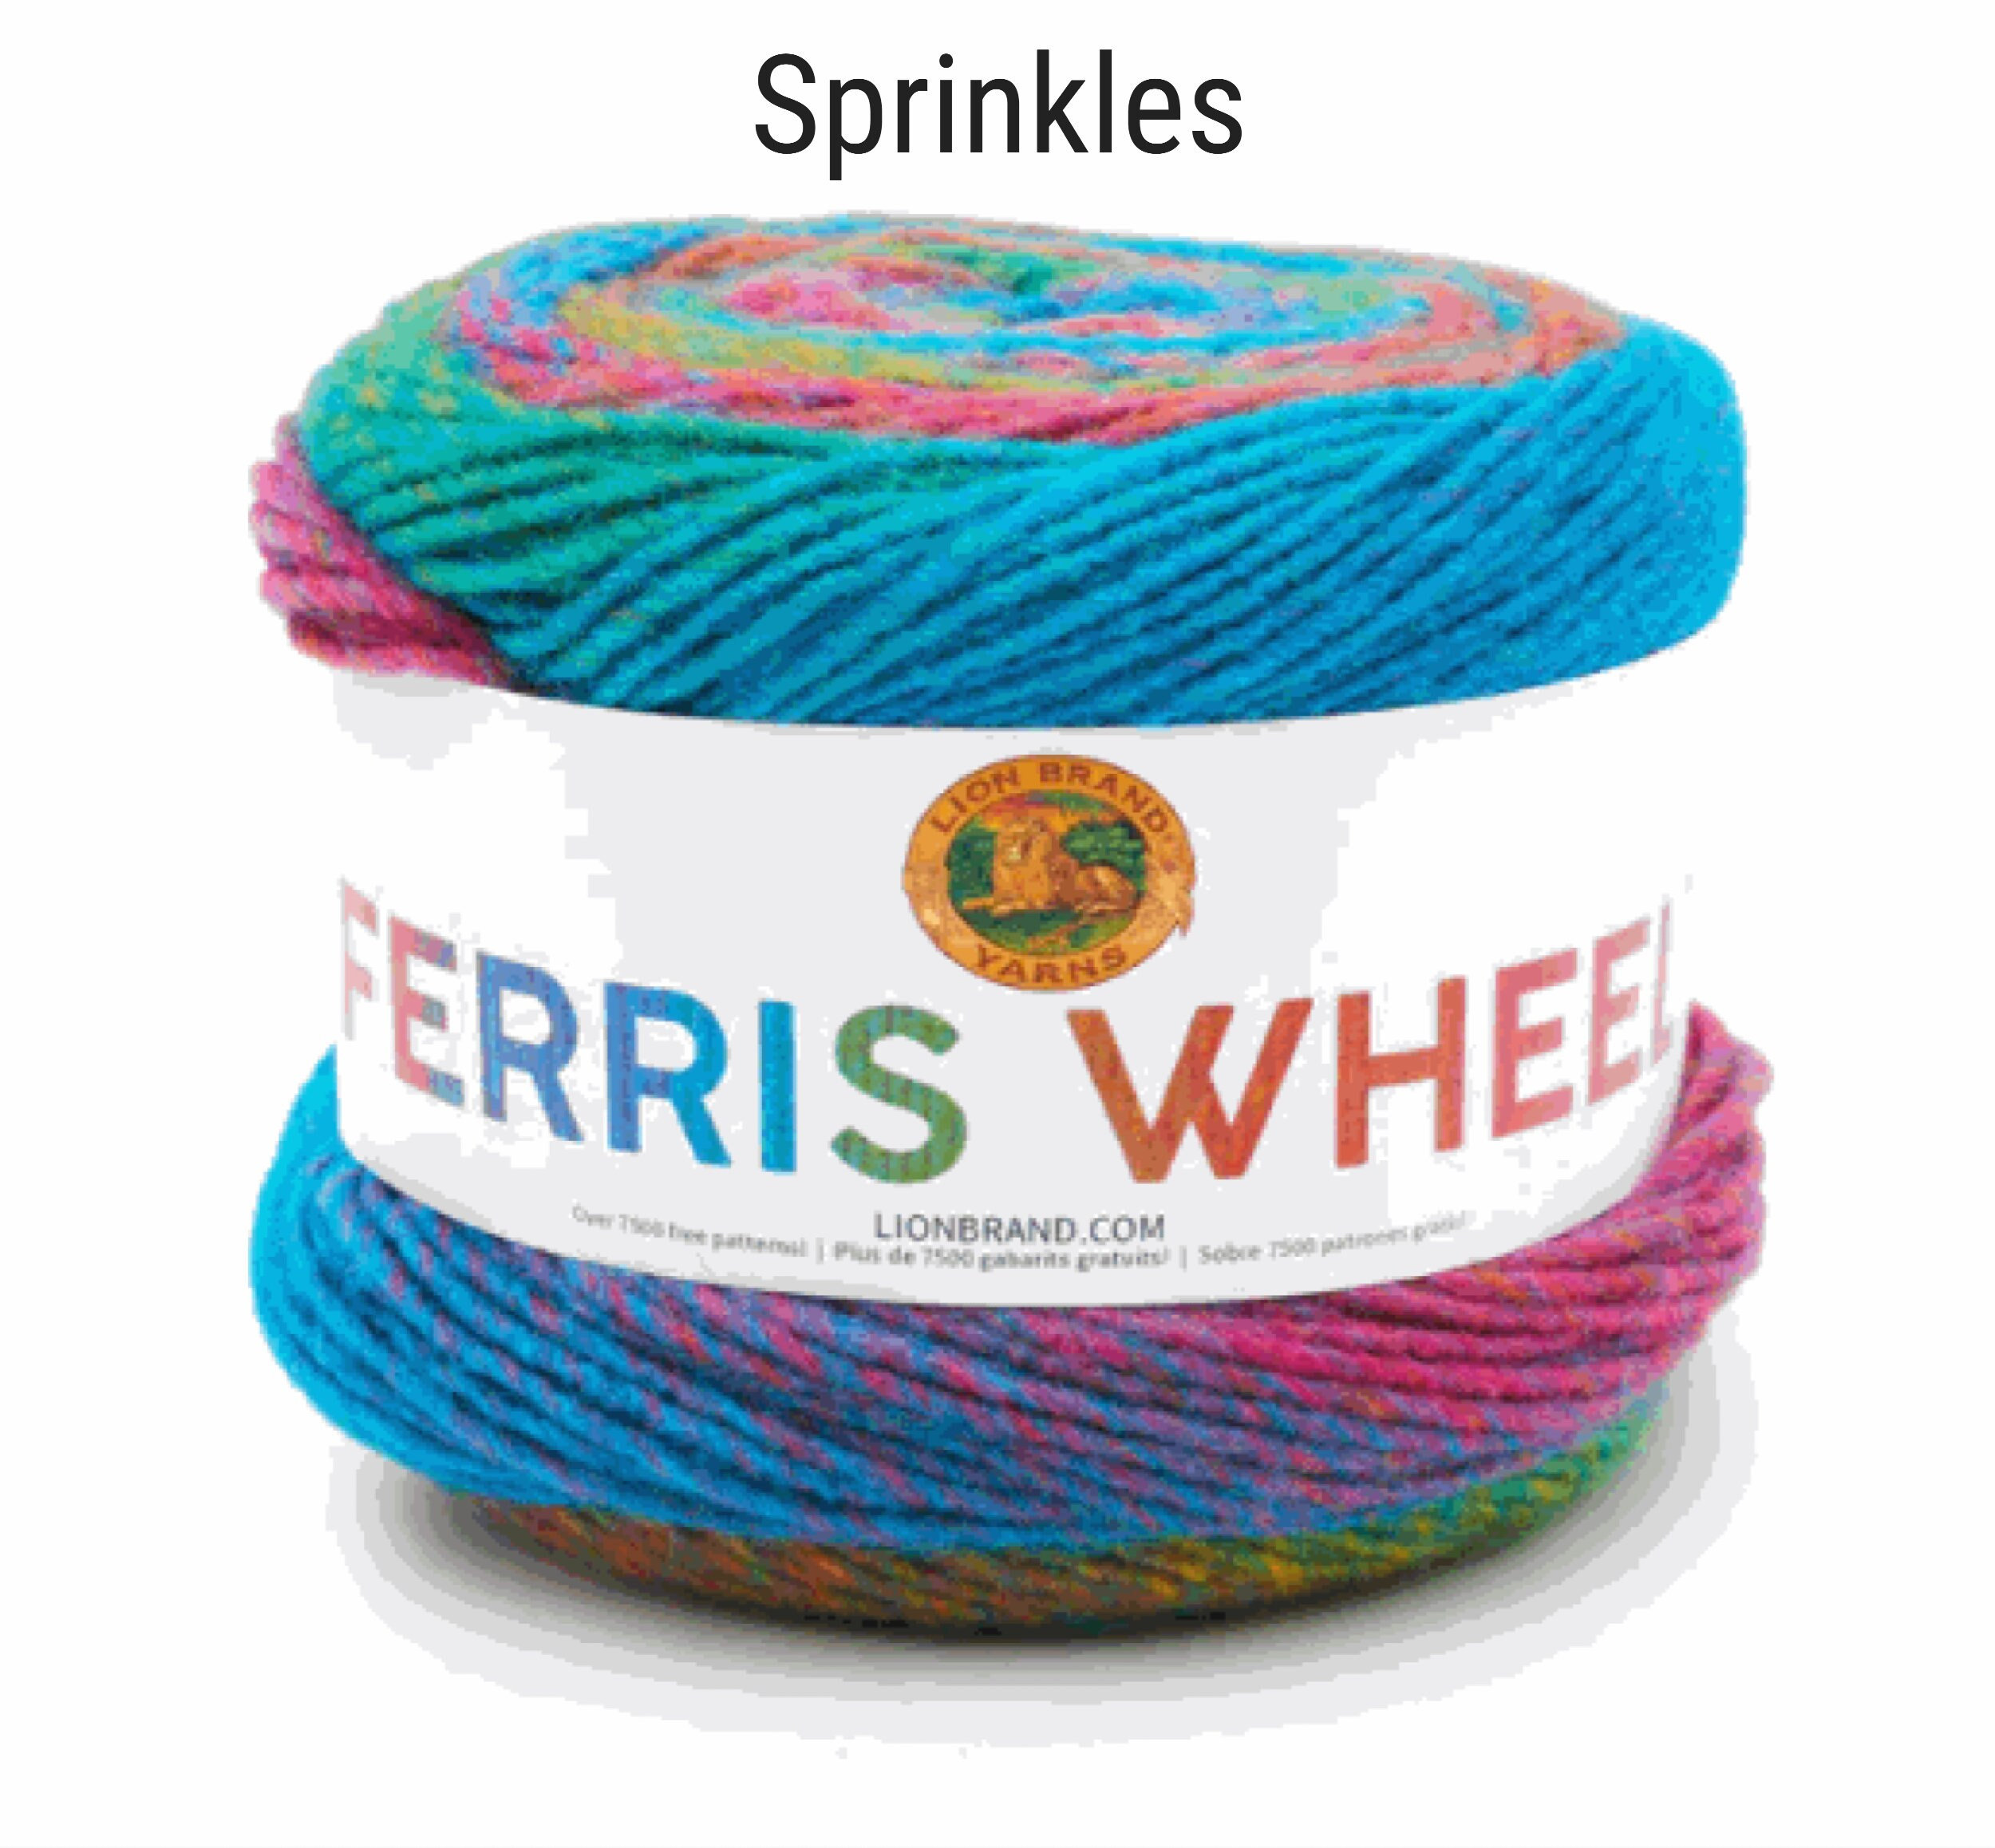 Ferris Wheel Yarn Lot of 3 Cakes in Sprinkles, Soft Colorful Yarn, Yarn for  Baby Items, Yarn for Crocheting, Yarn for Craftsmelinas Crafts 